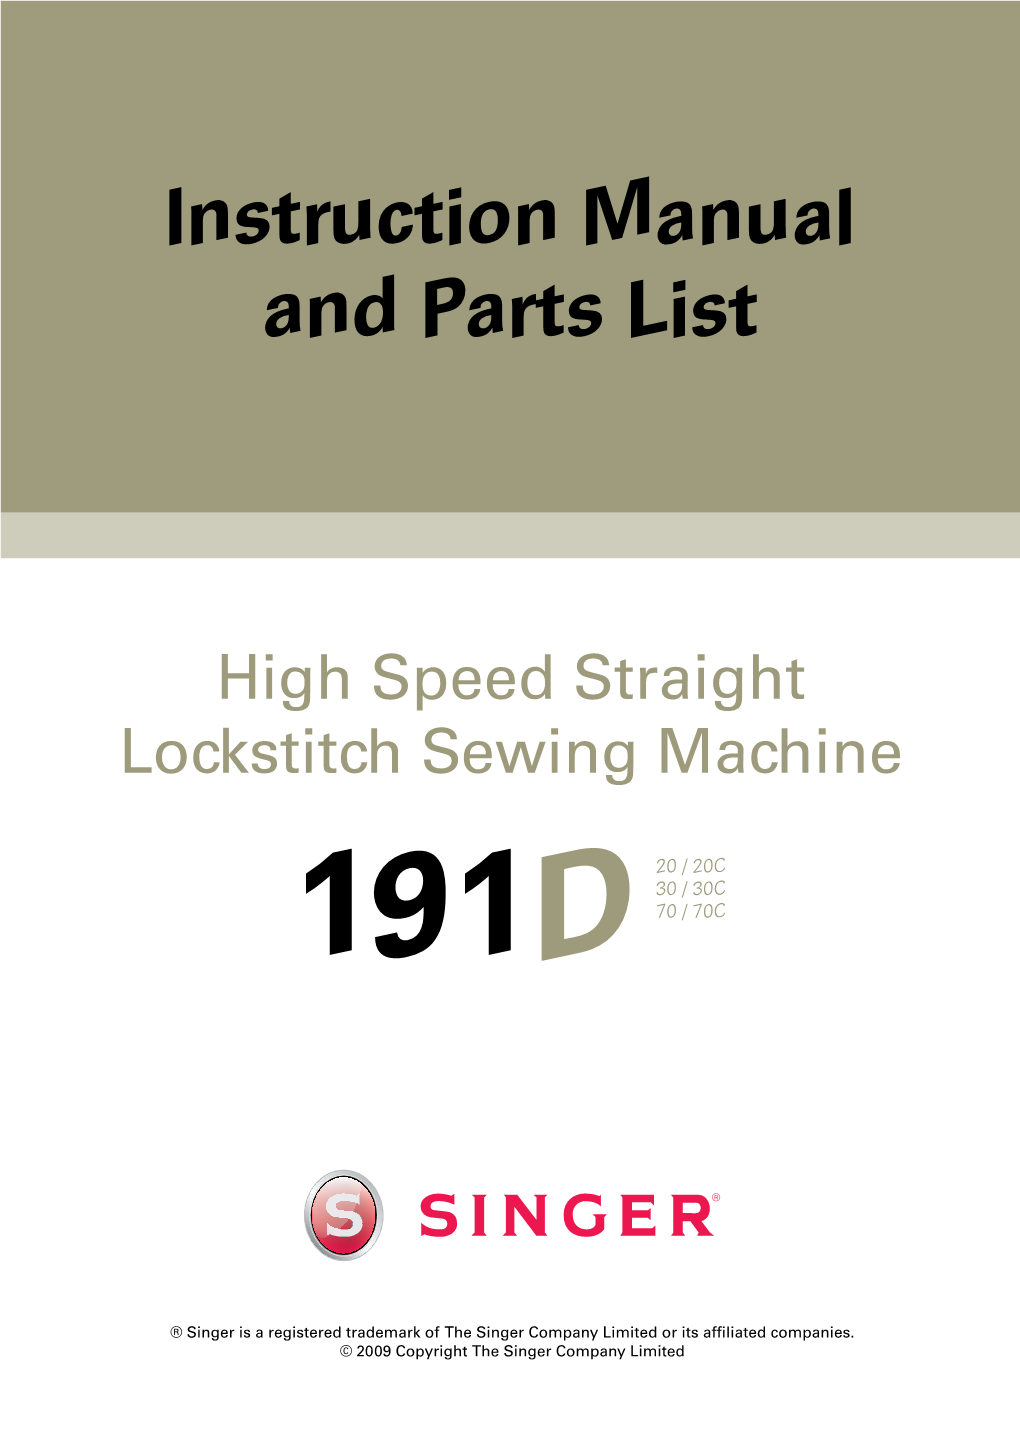 Singer 191D Lockstich | Instruction Manual and Parts List